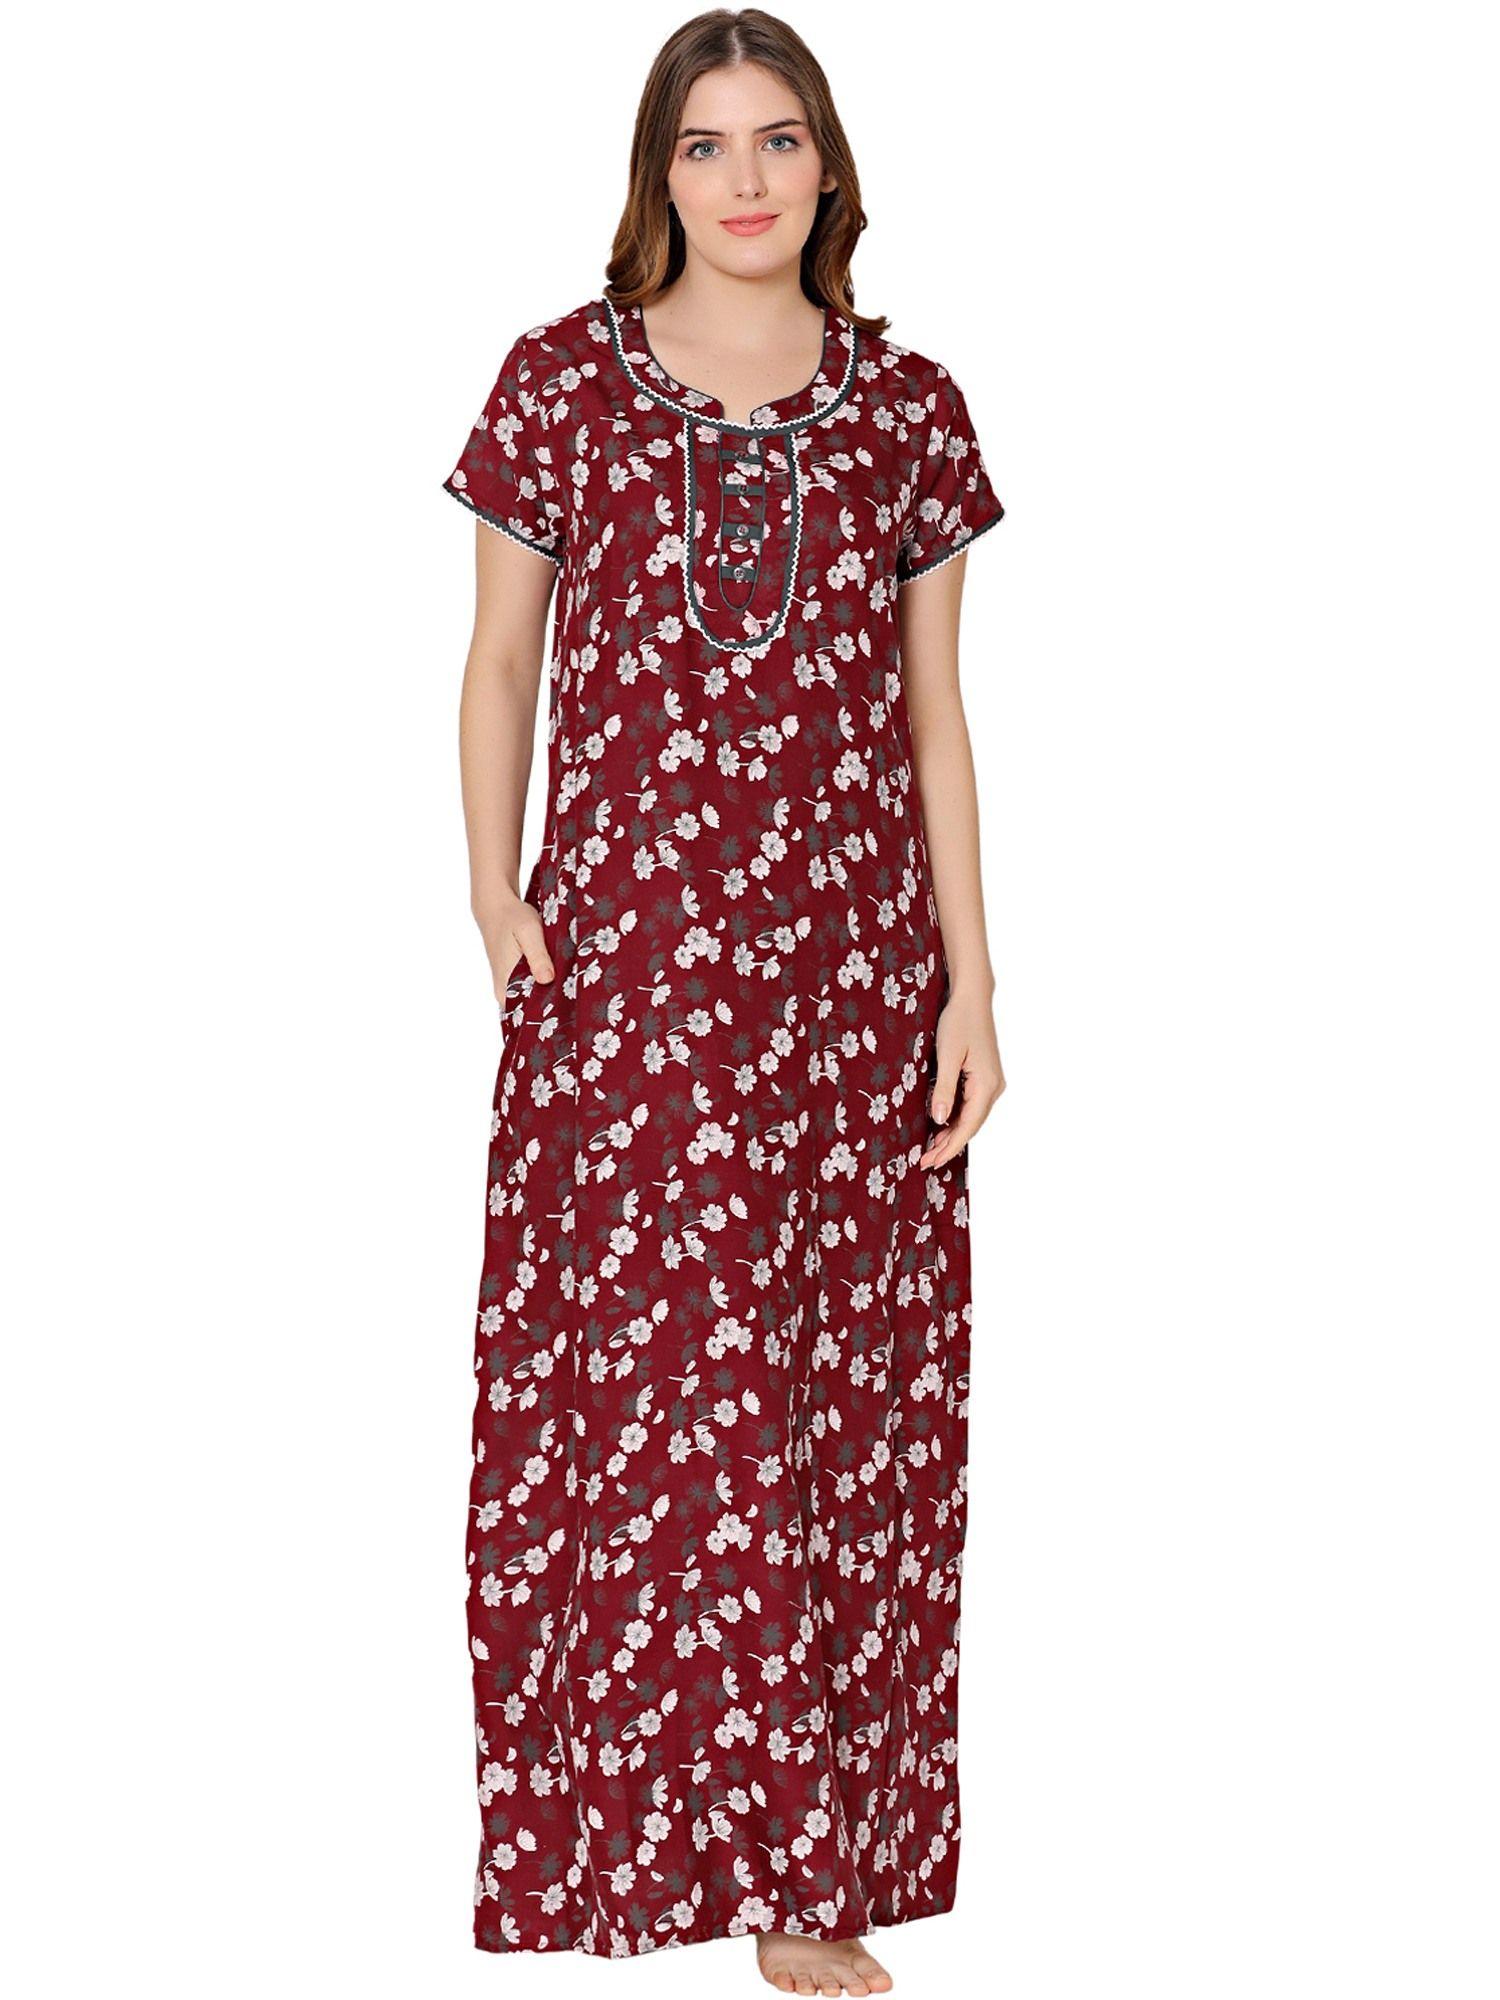 womens-polycotton-round-neck-printed-long-night-dress--bsn2019b-maroon